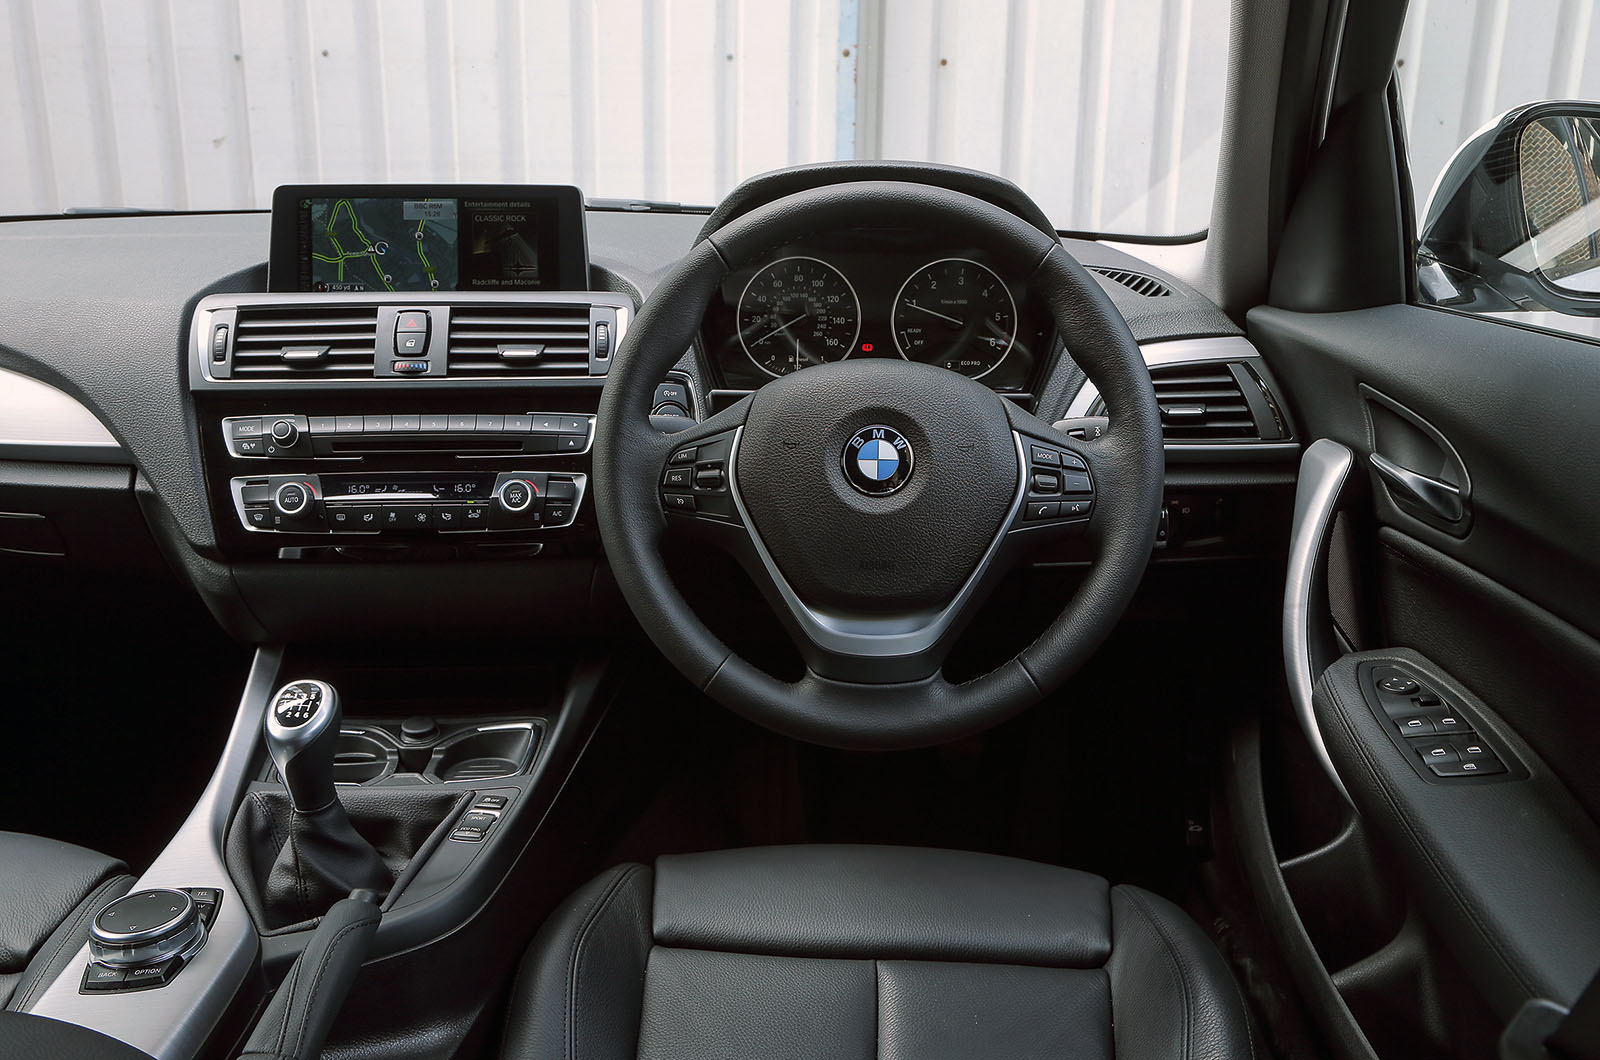 BMW 1 Series interior